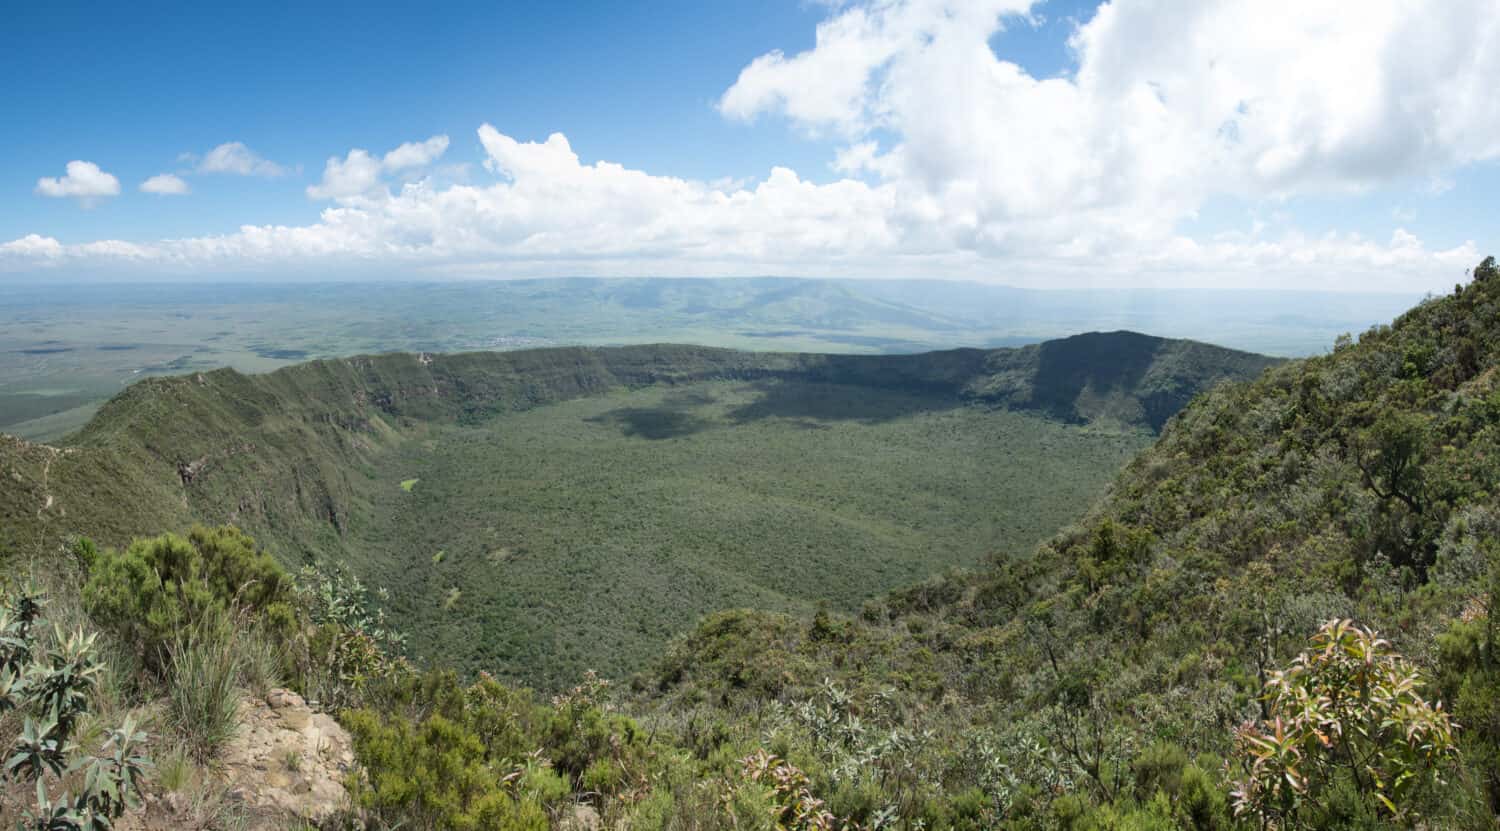 Sul bordo della caldera del vulcano Longonot, Rift Valley, Mount Longonot National Park, Kenya.